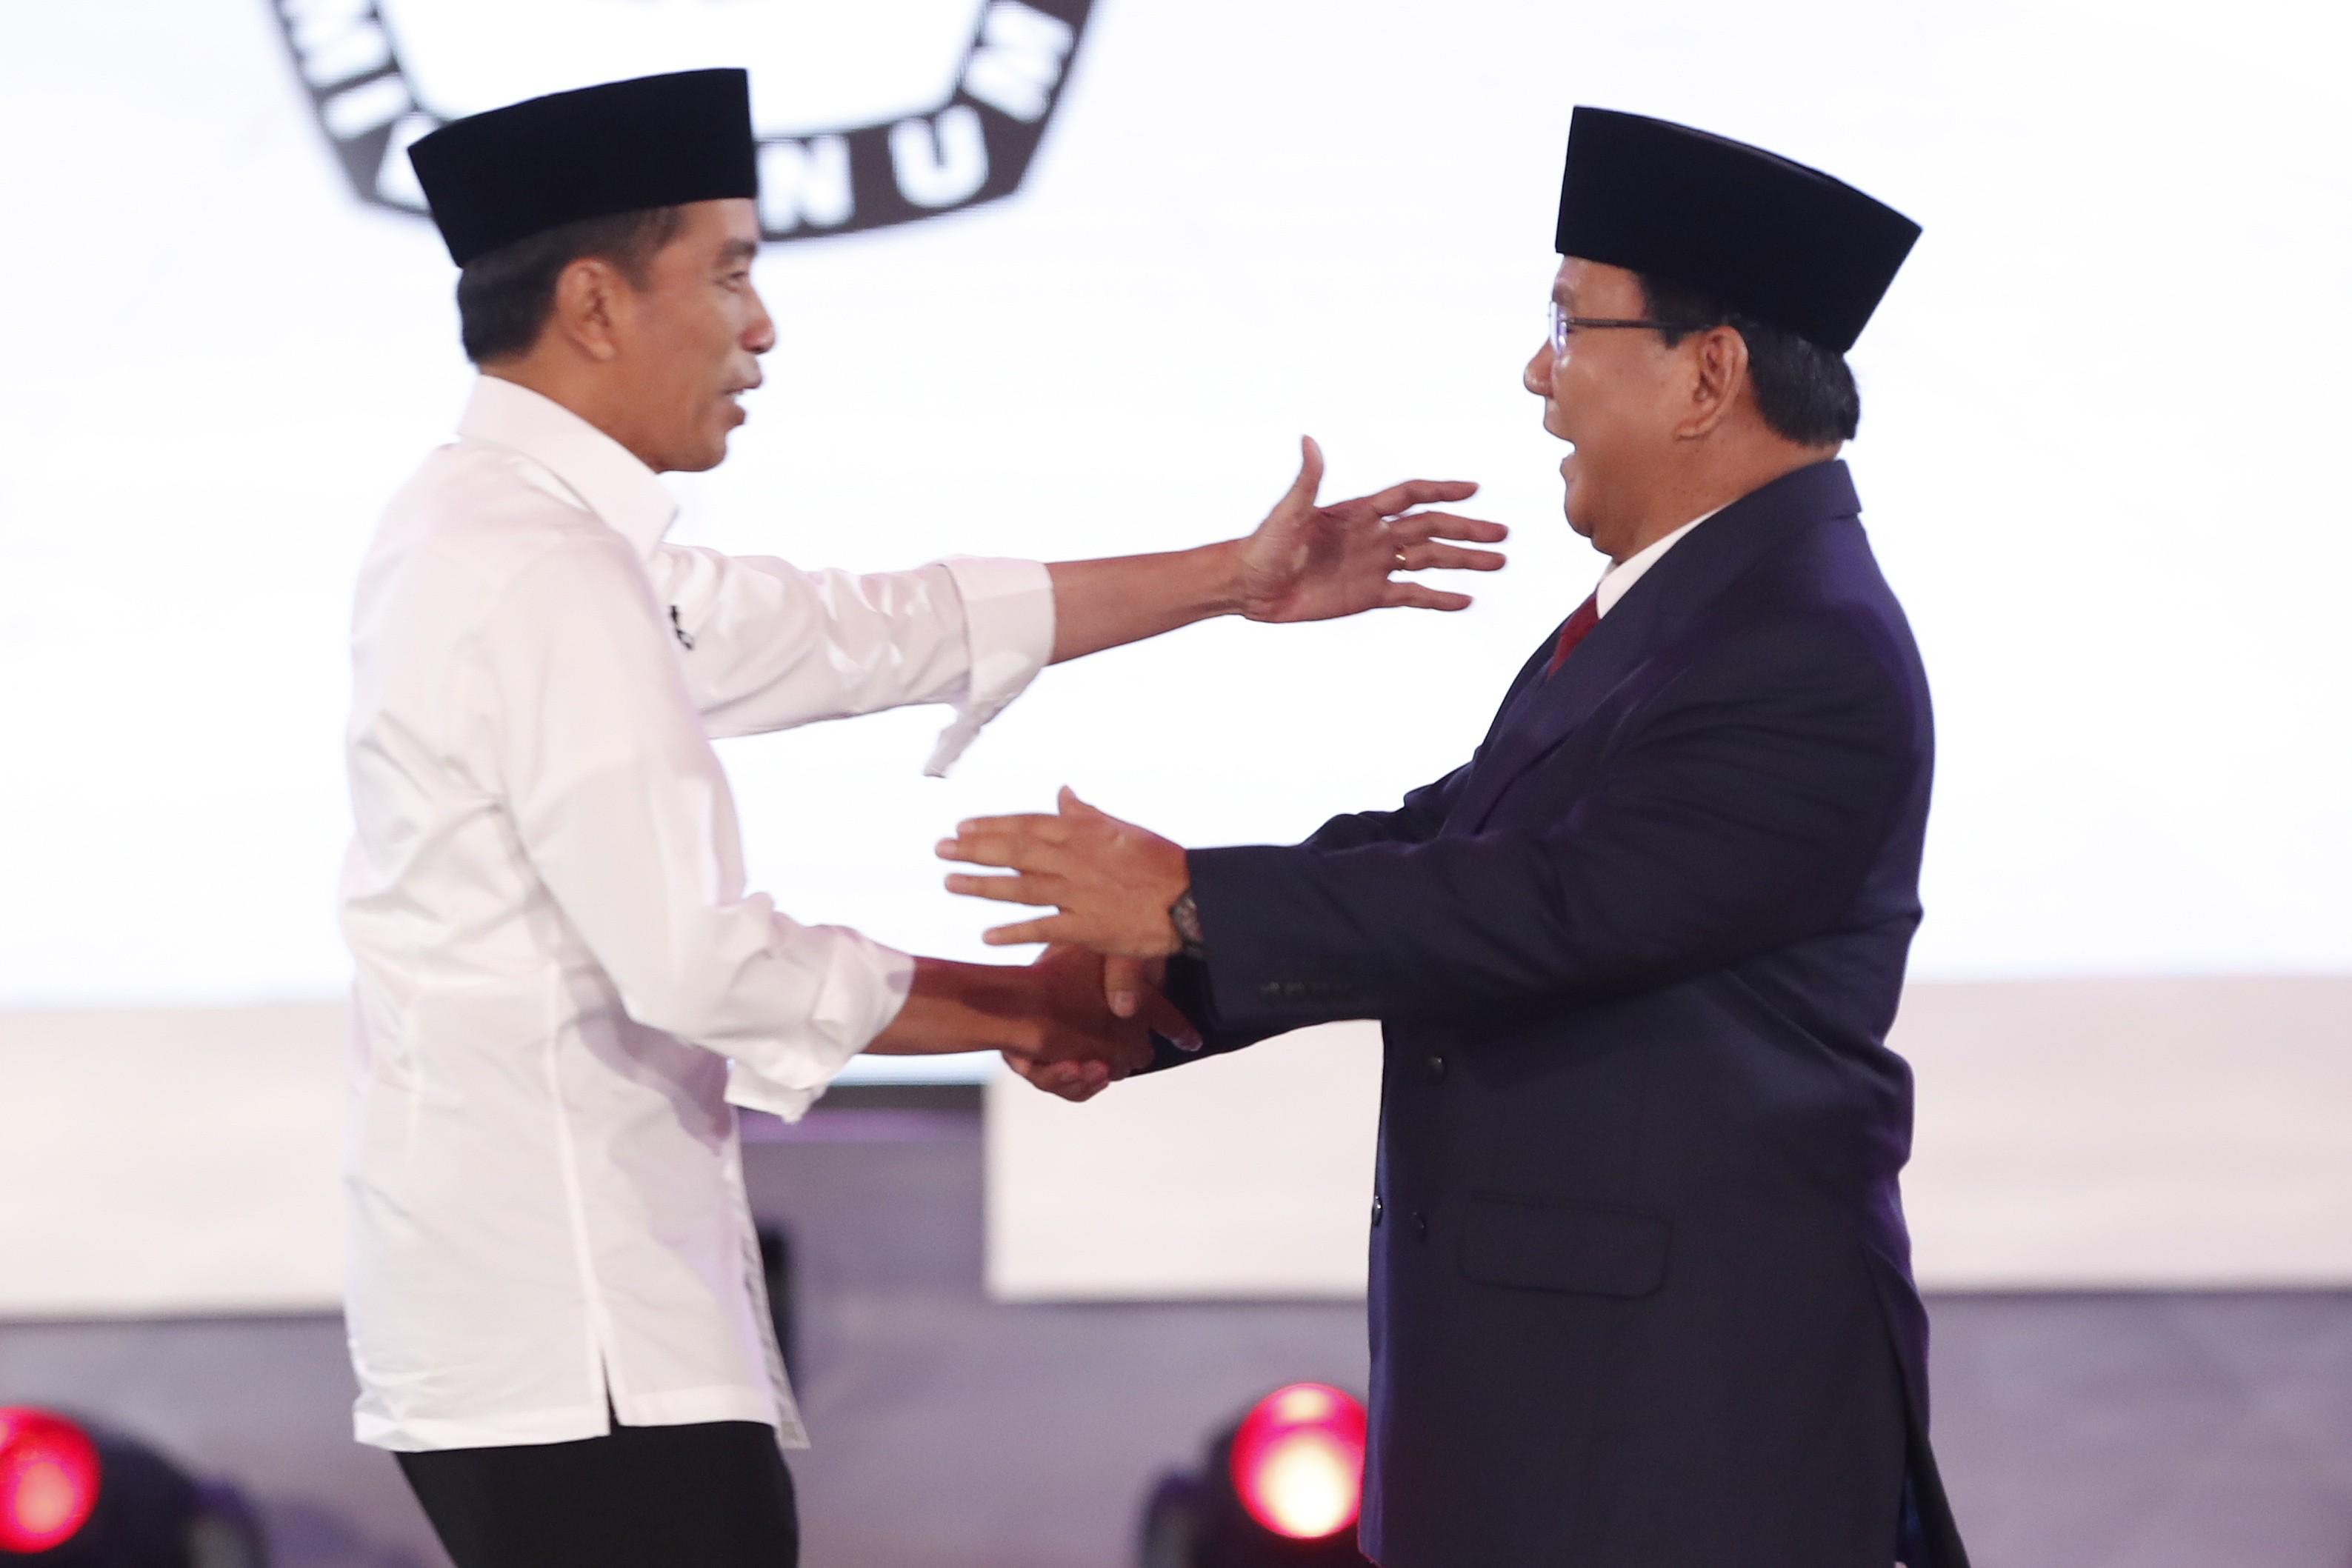 Indonesian presidential candidates Prabowo Subianto and Joko